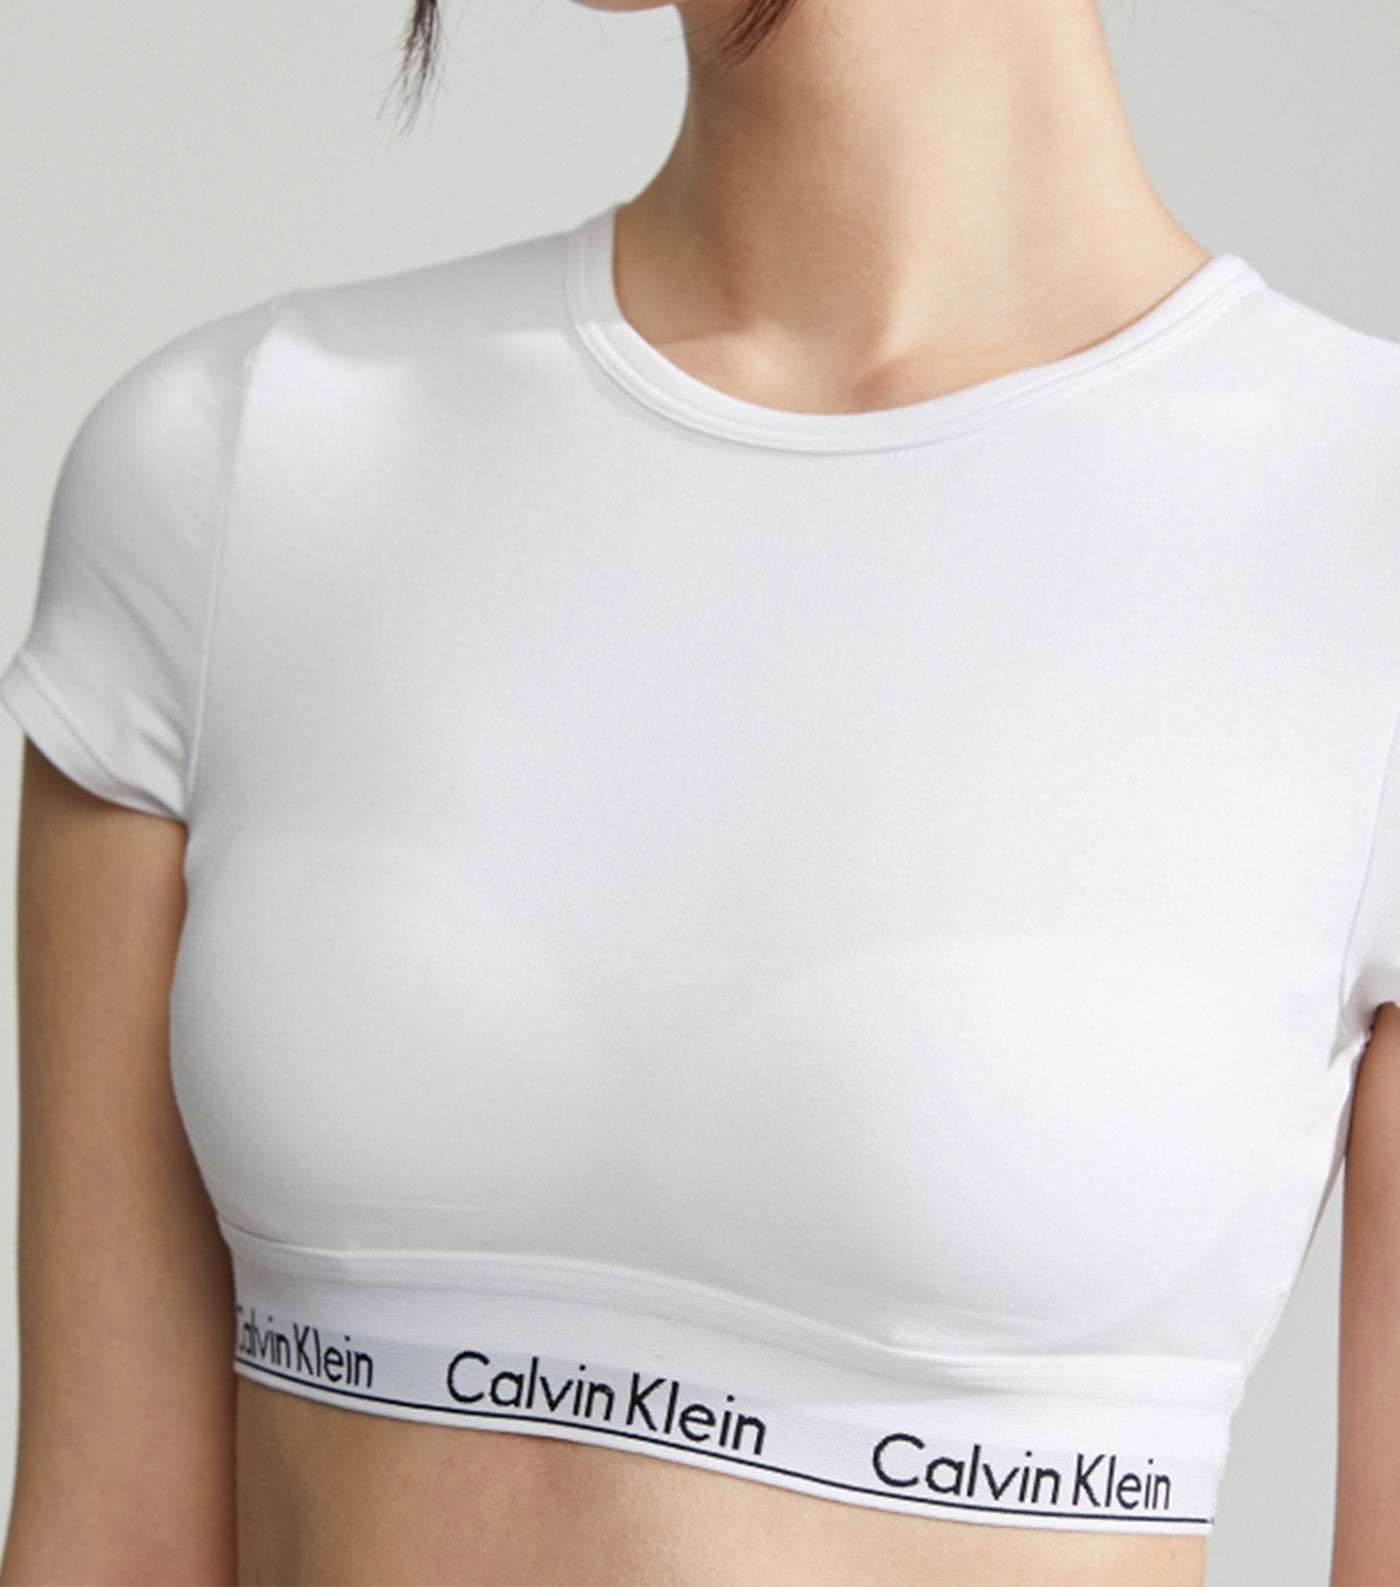 Calvin Klein T-Shirt Bra Sz 34C  T shirt bra, Calvin, Calvin klein